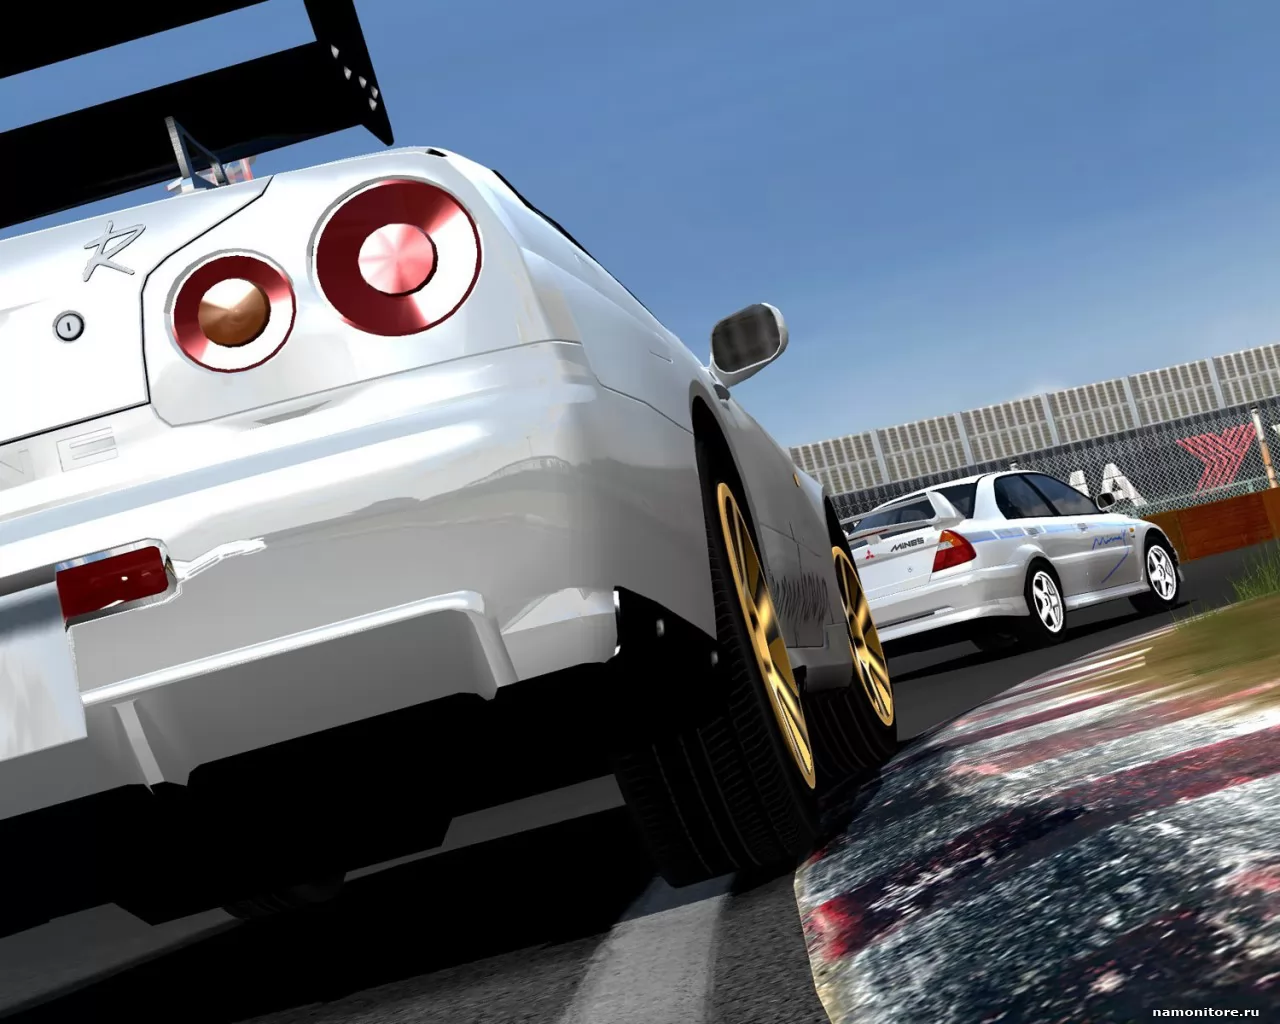 Forza Motorsport 2 